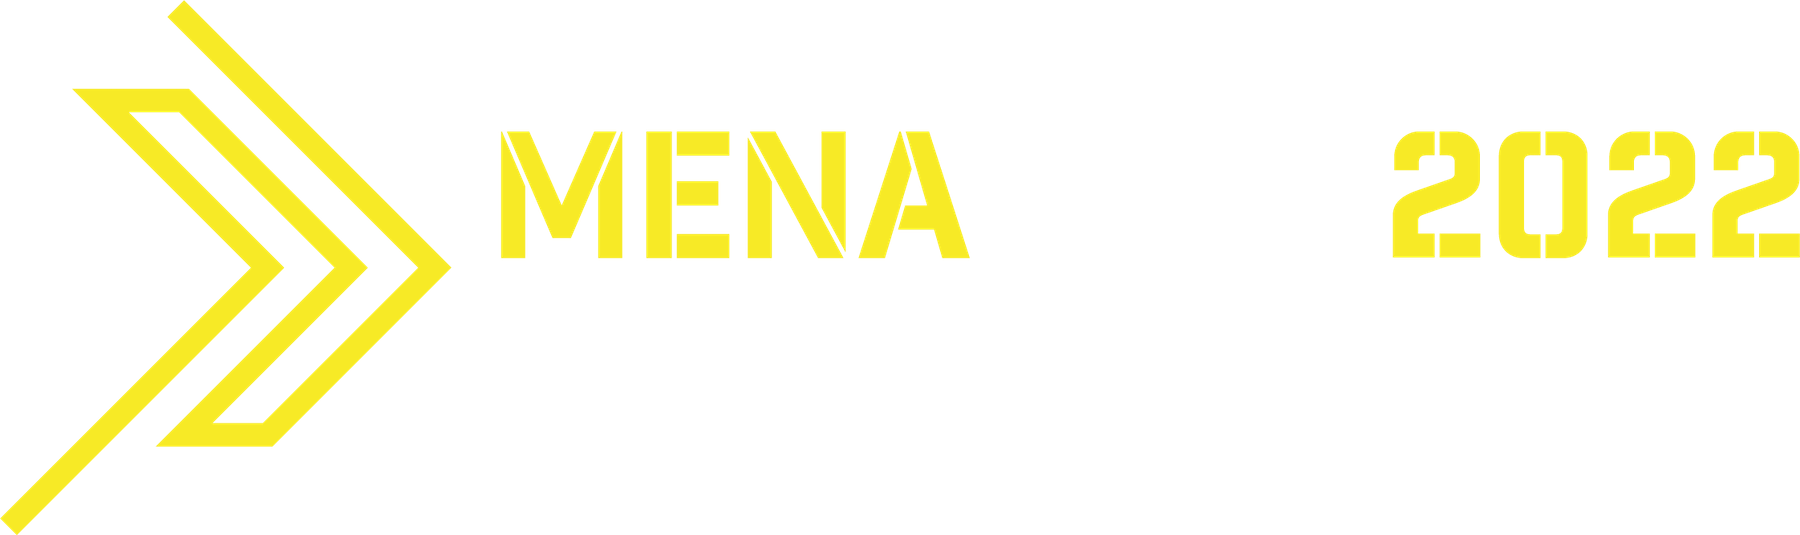 MENA Search Awards logo